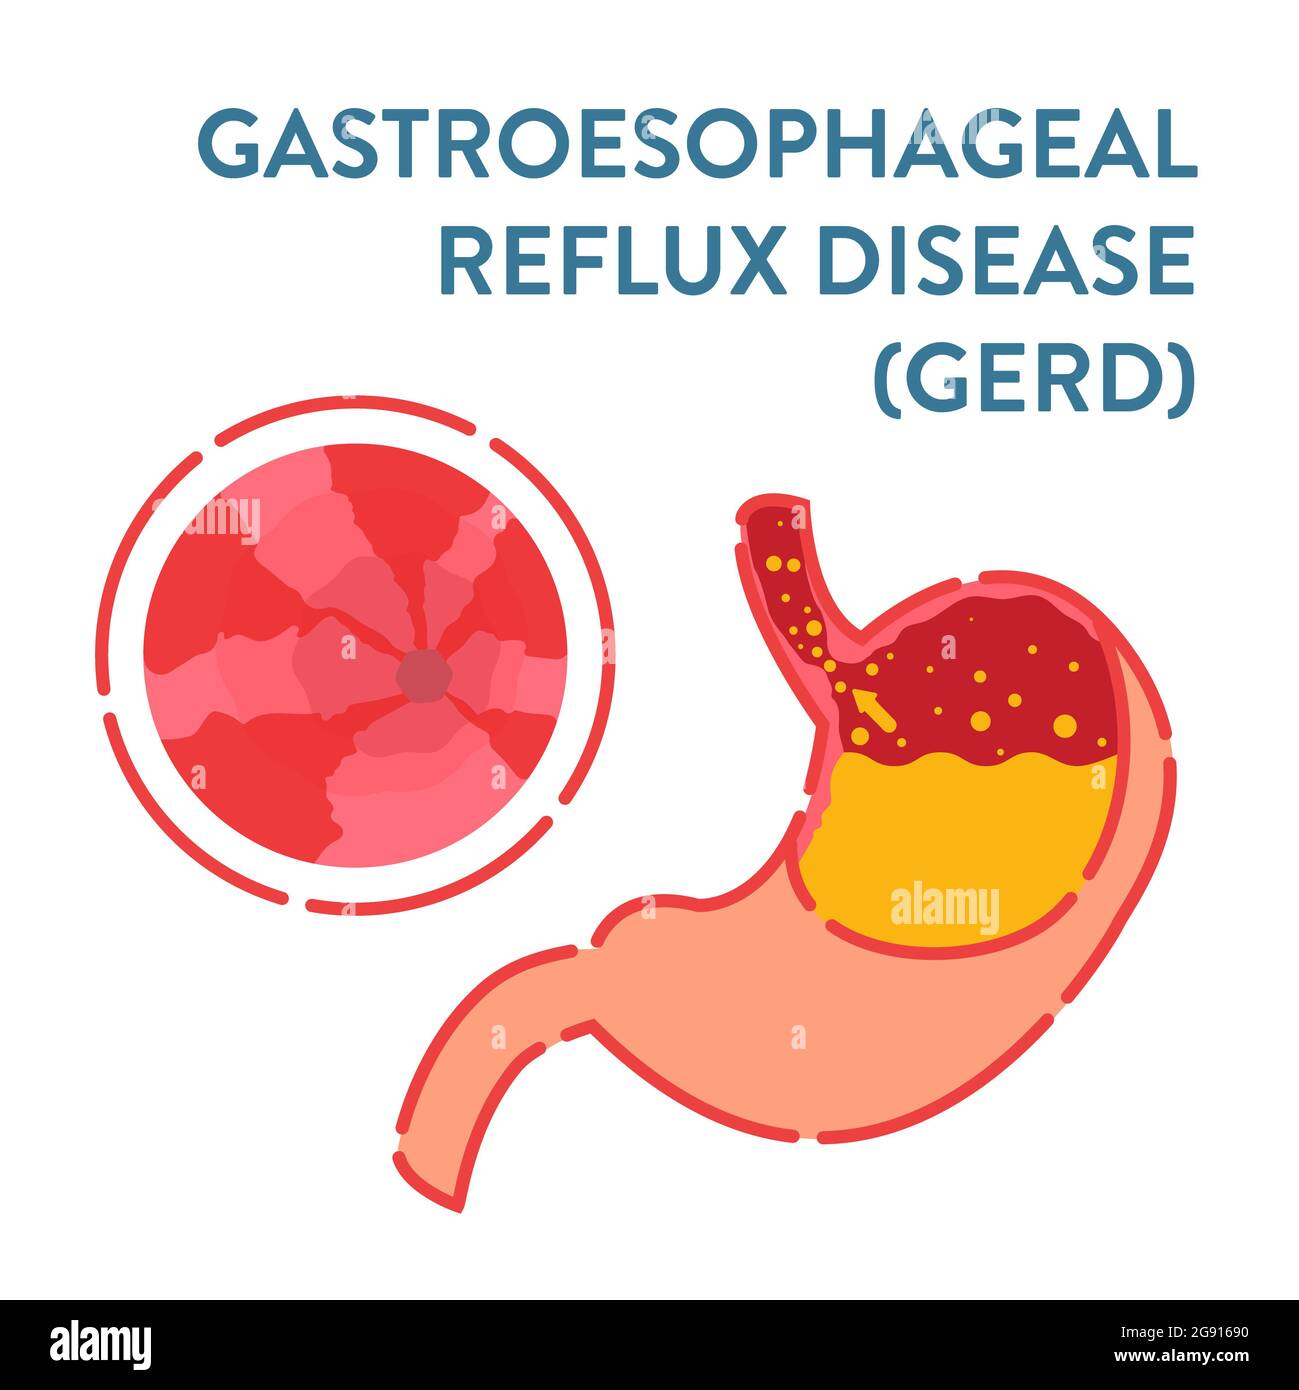 Gastroesophageal reflux disease, illustration Stock Photo